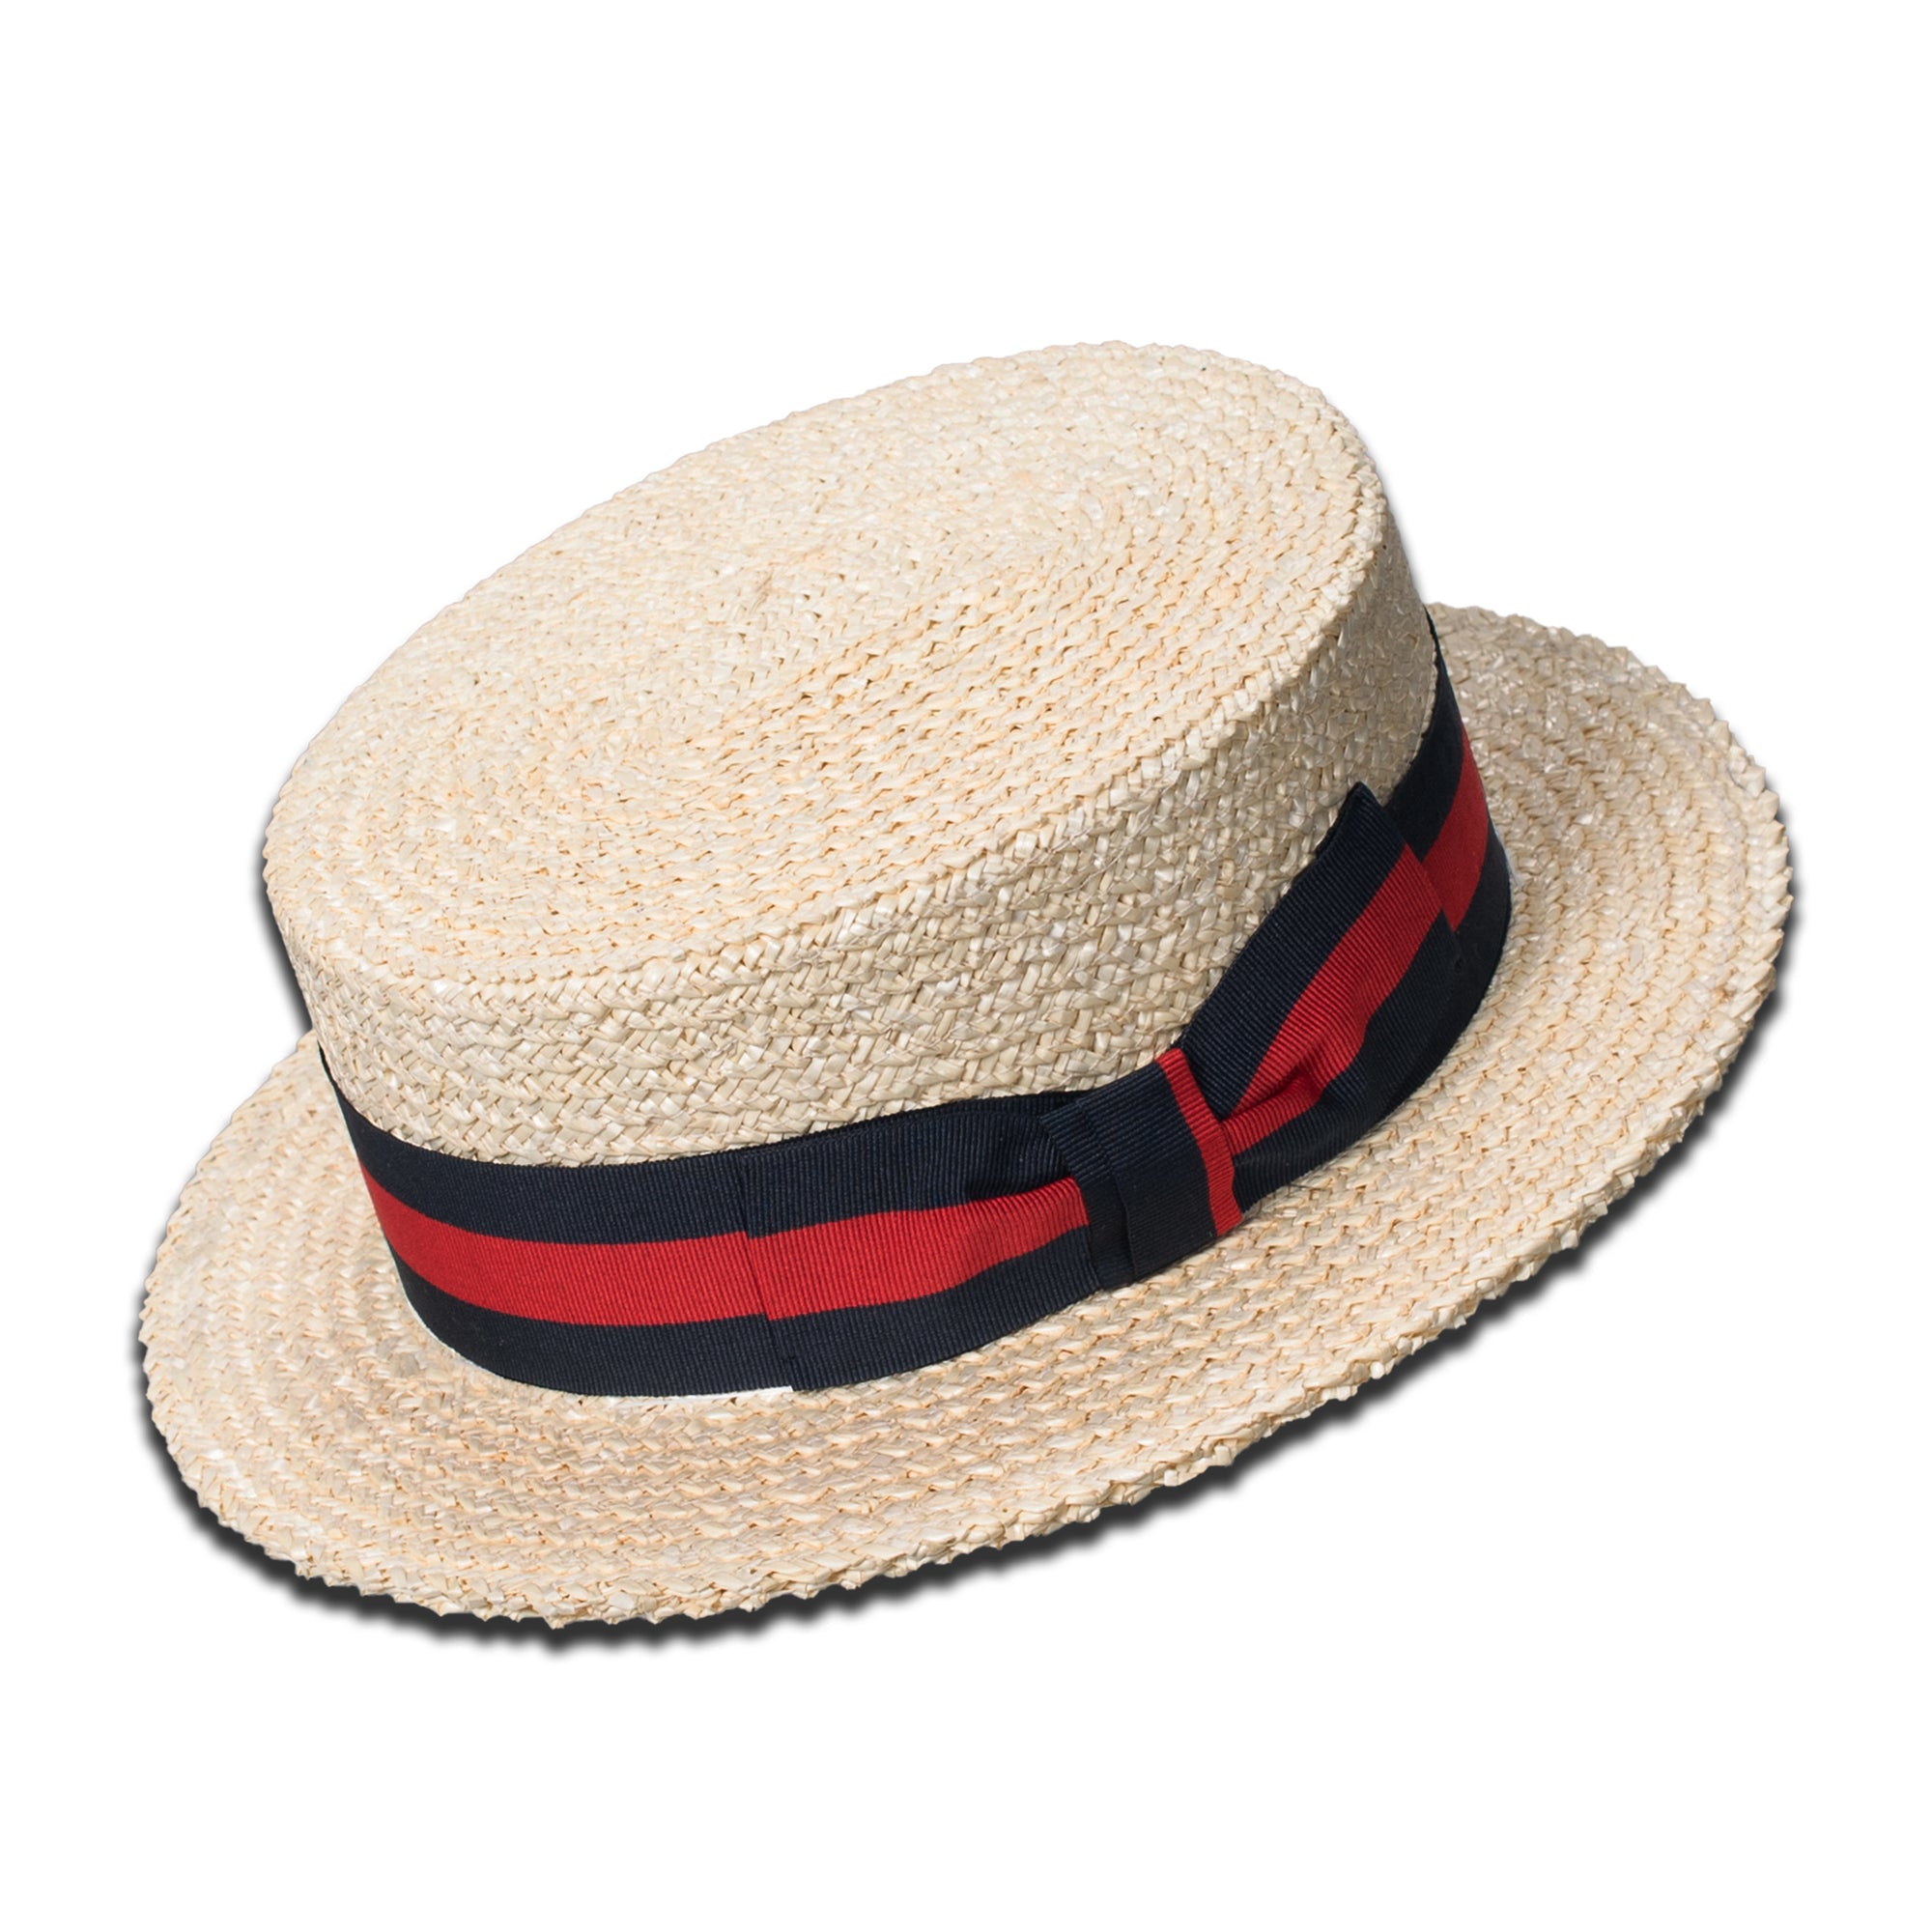 Boater Straw Hat by Tesi